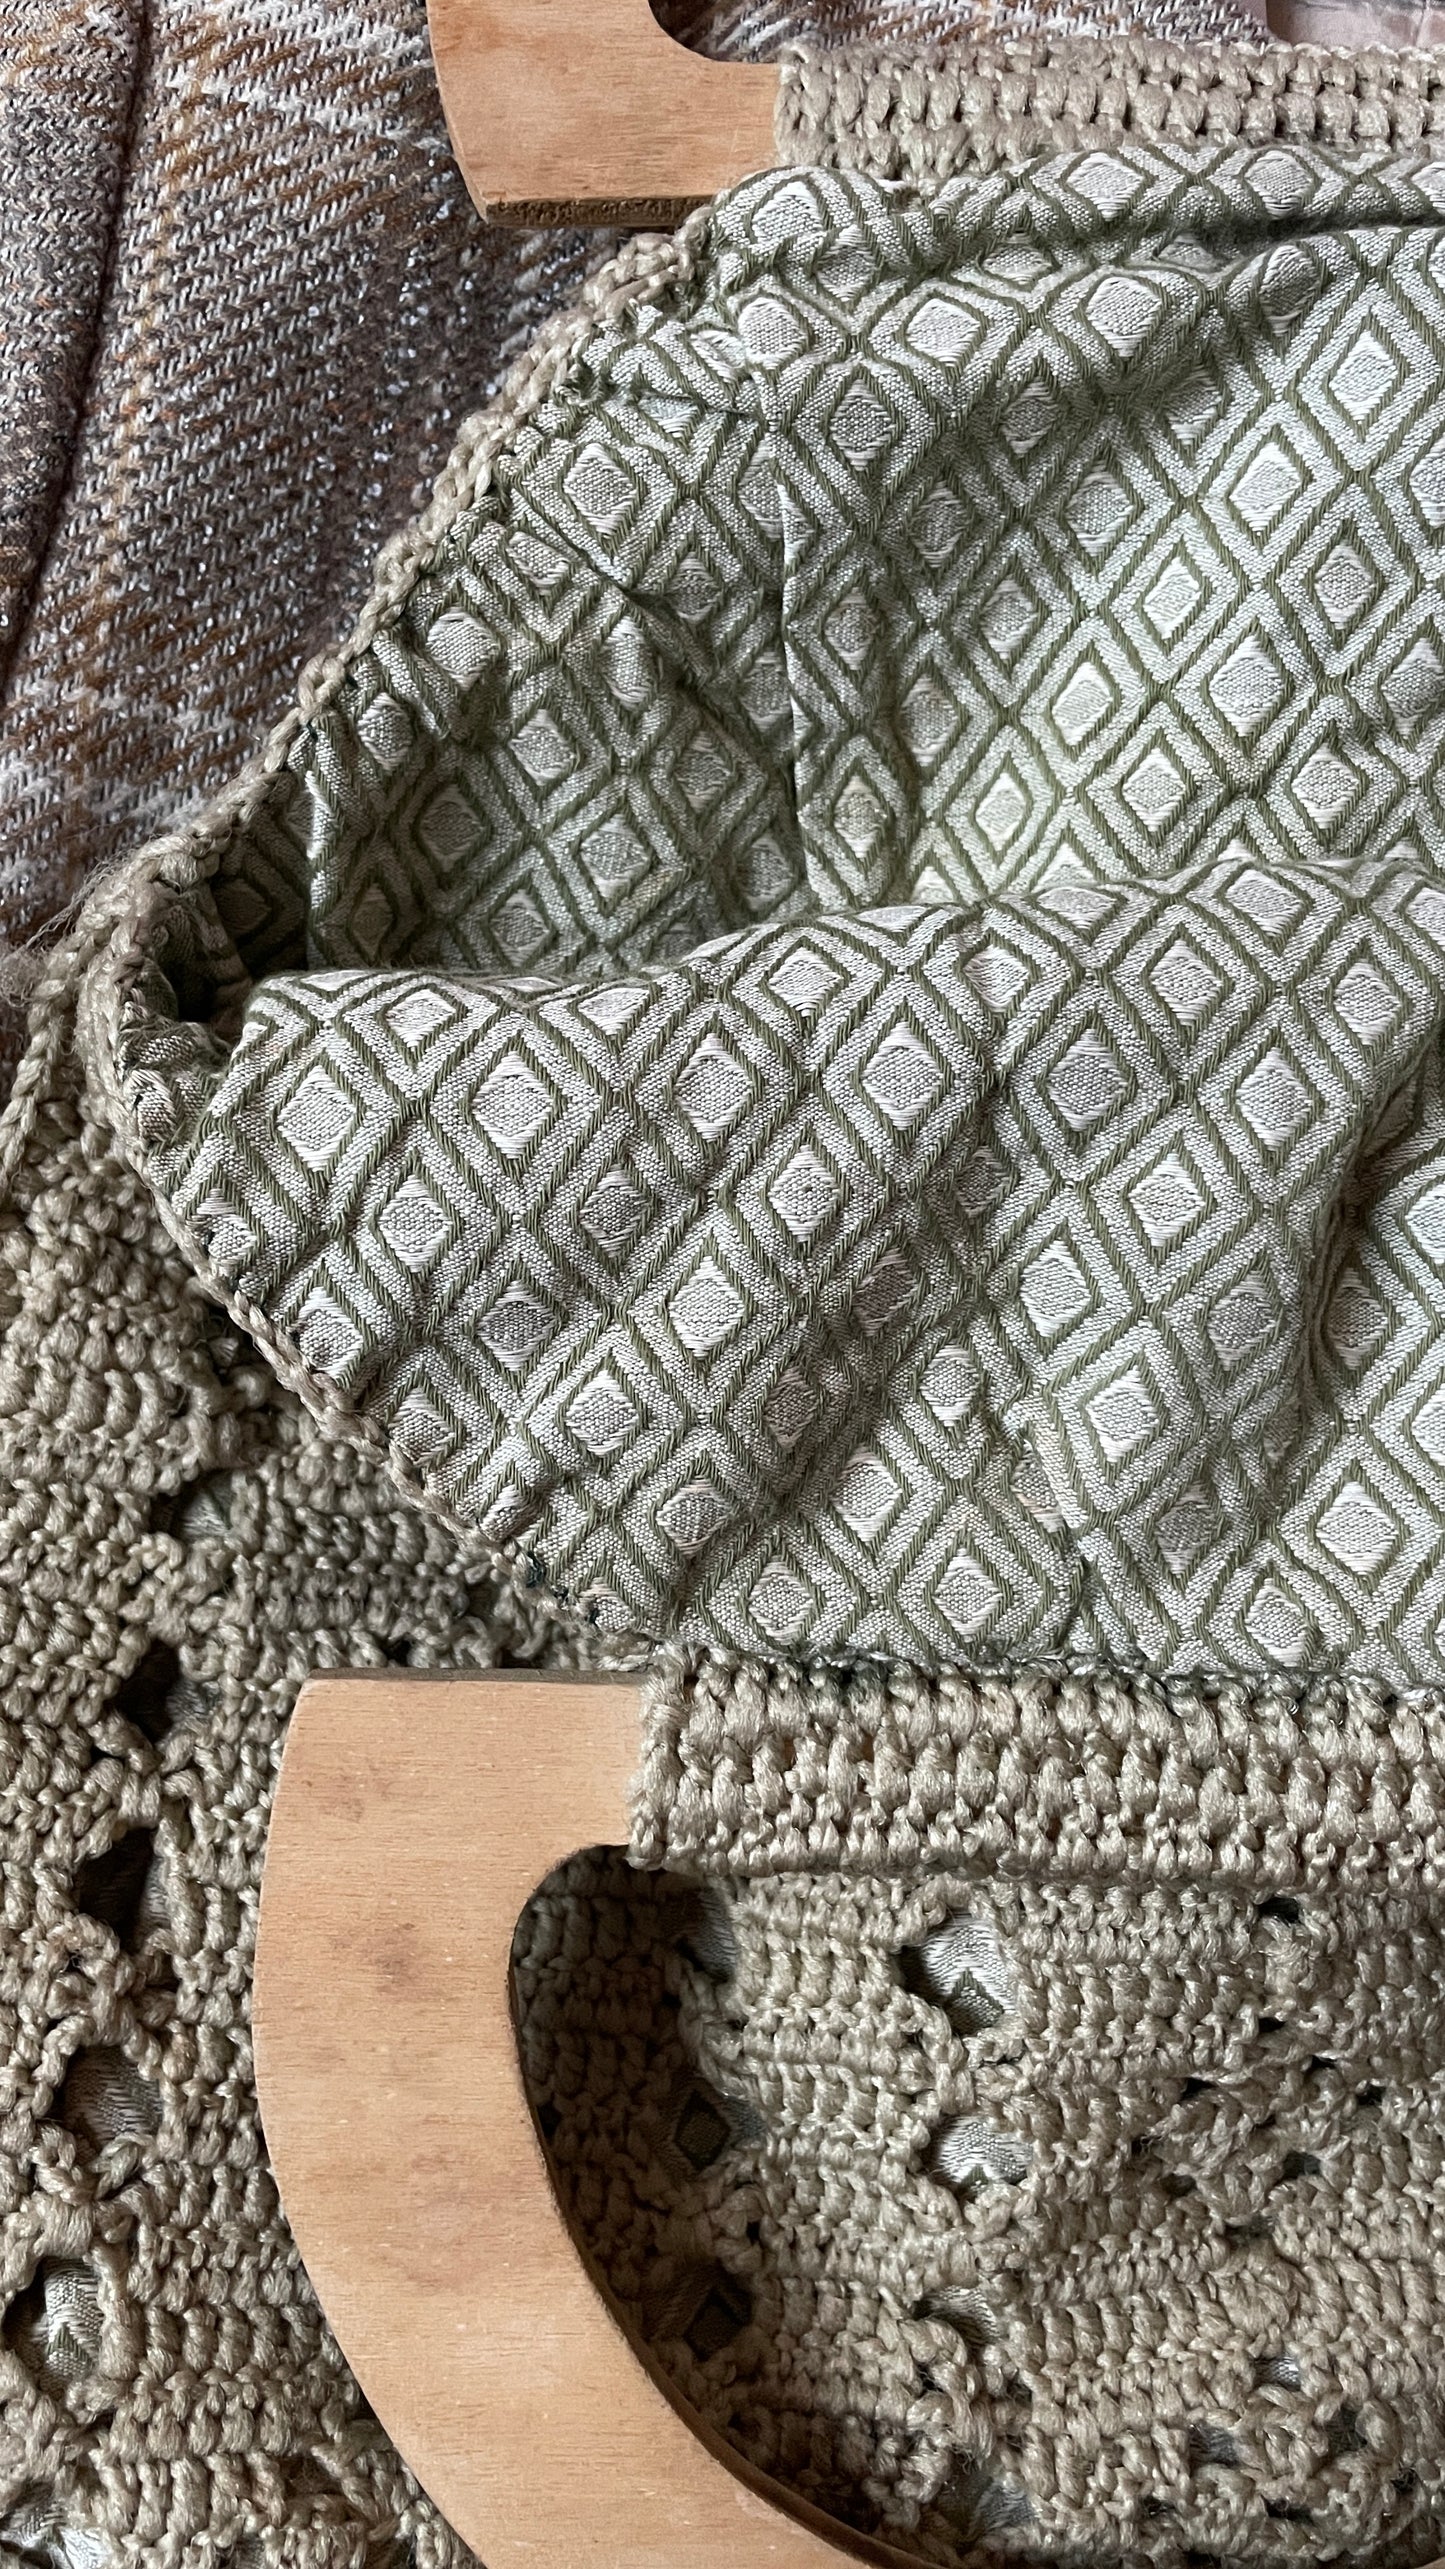 70s crochet purse